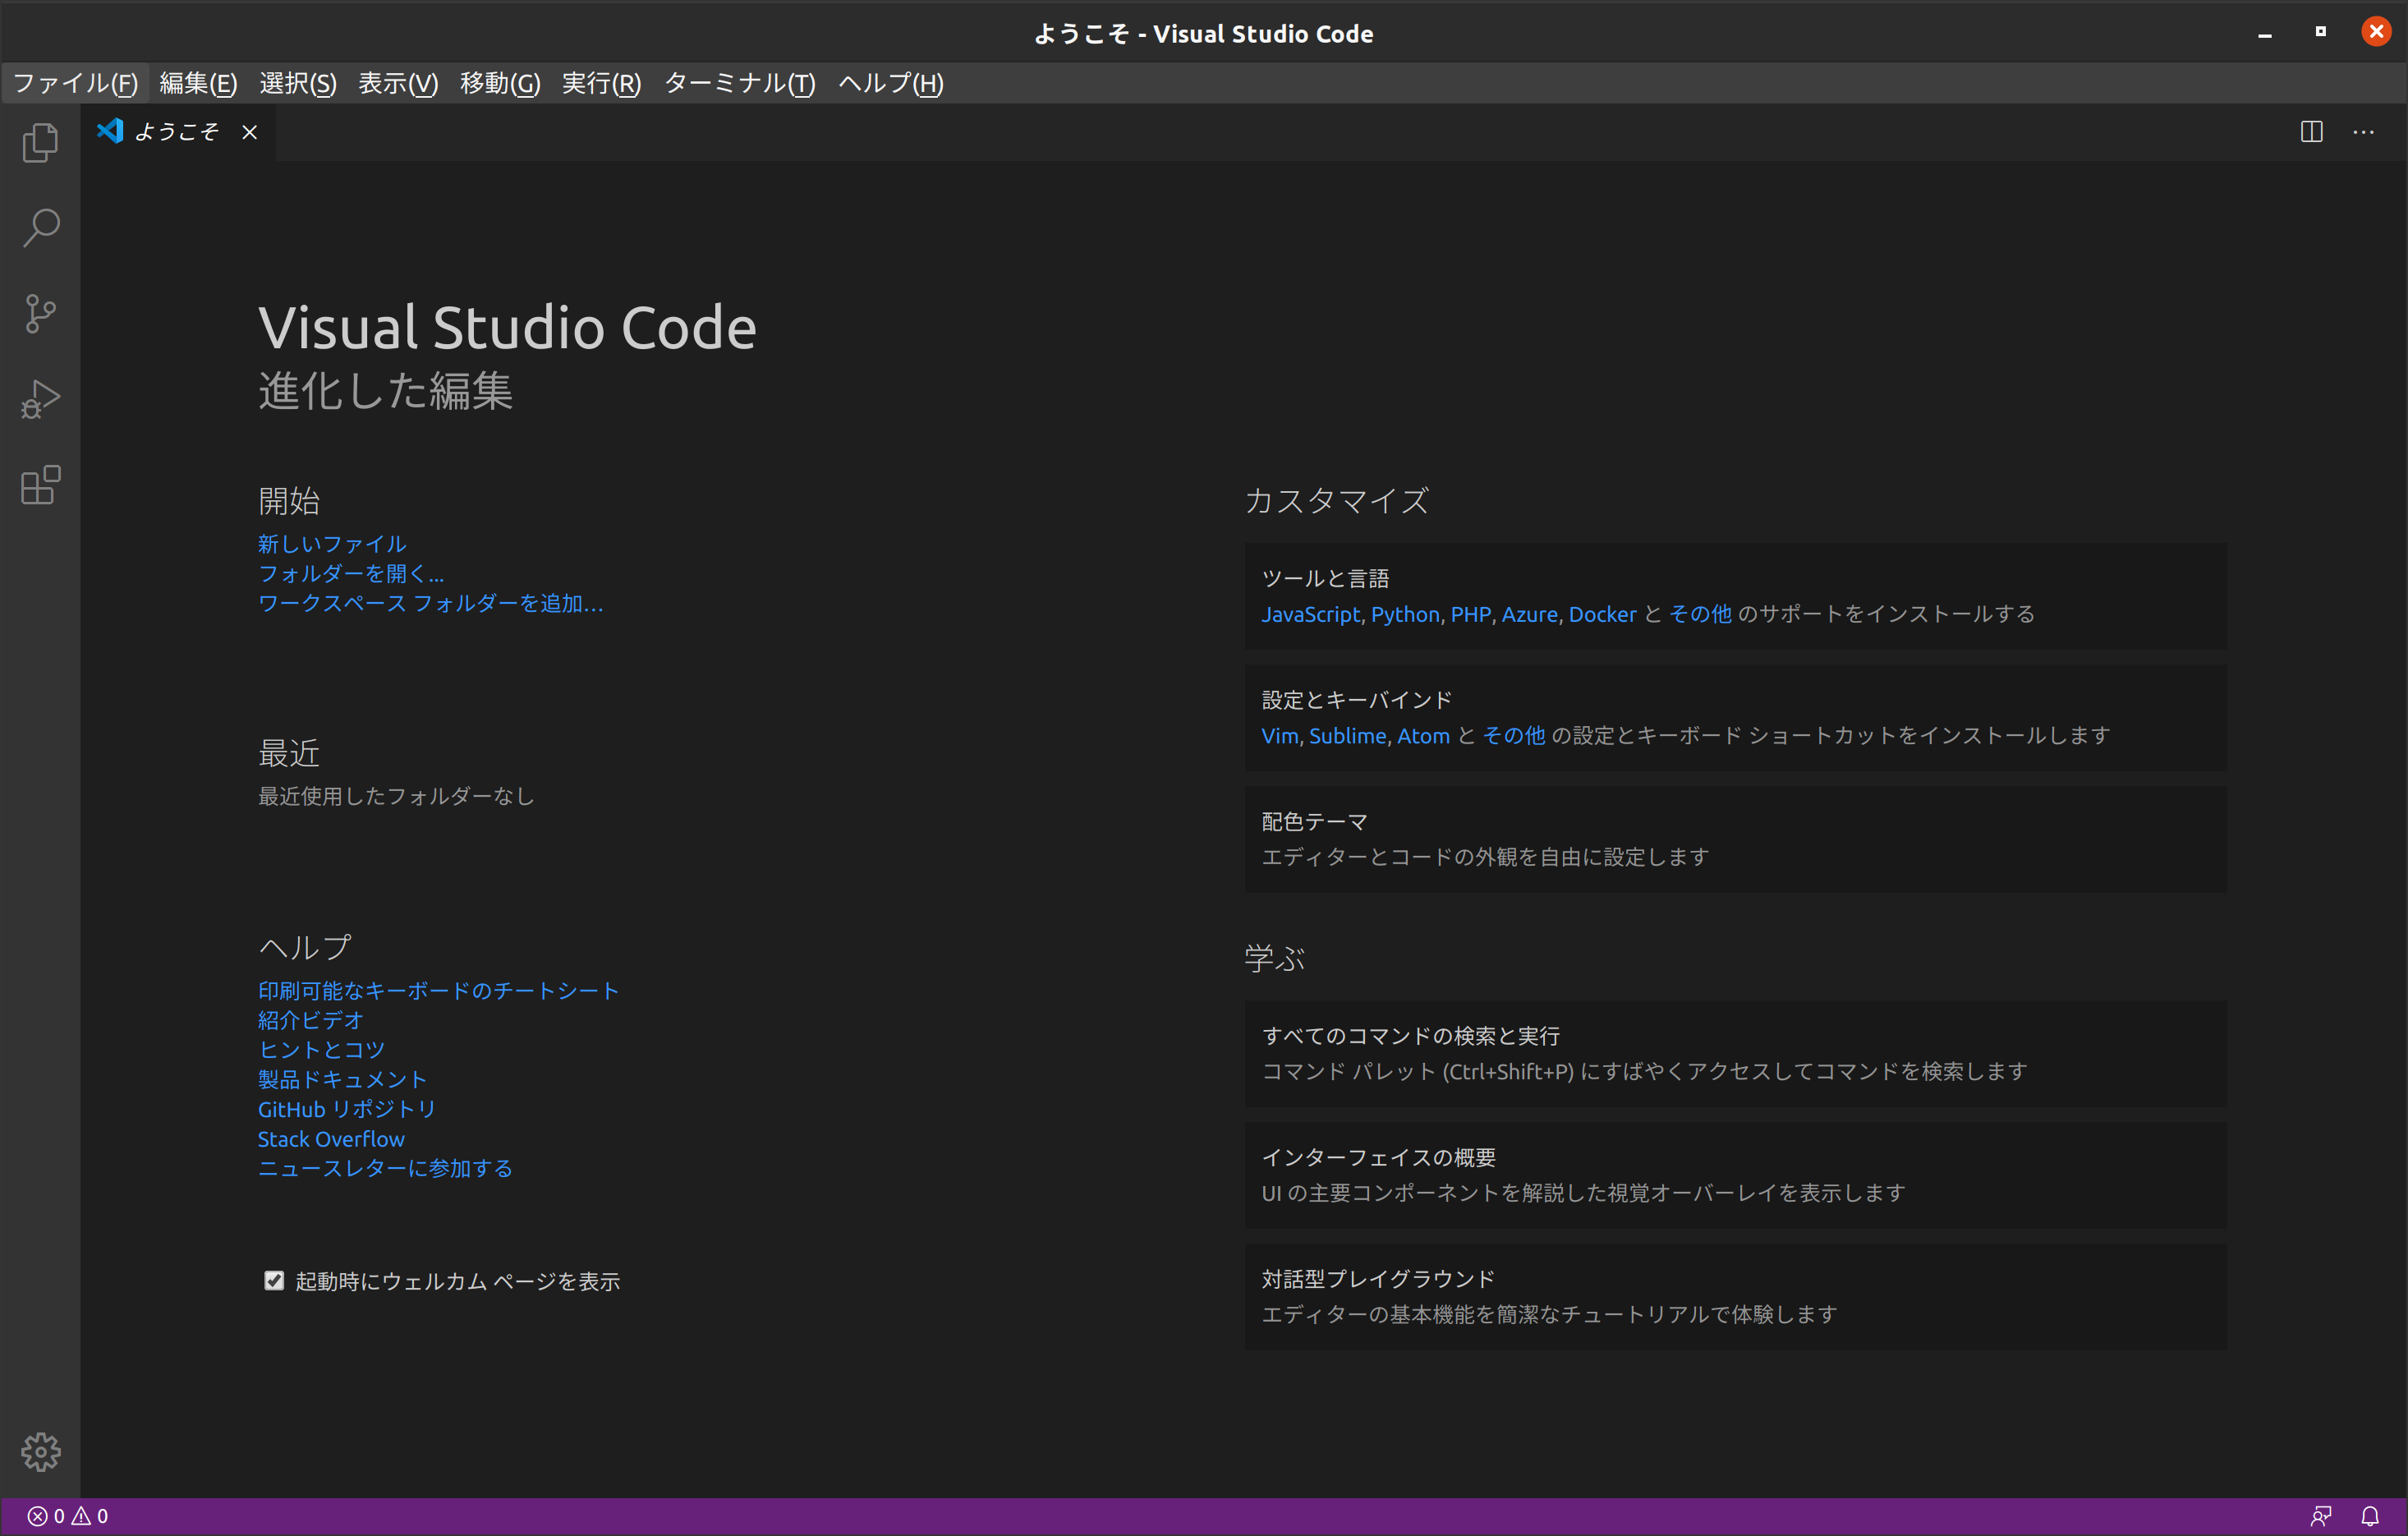 visual studio code install ubuntu 20.04